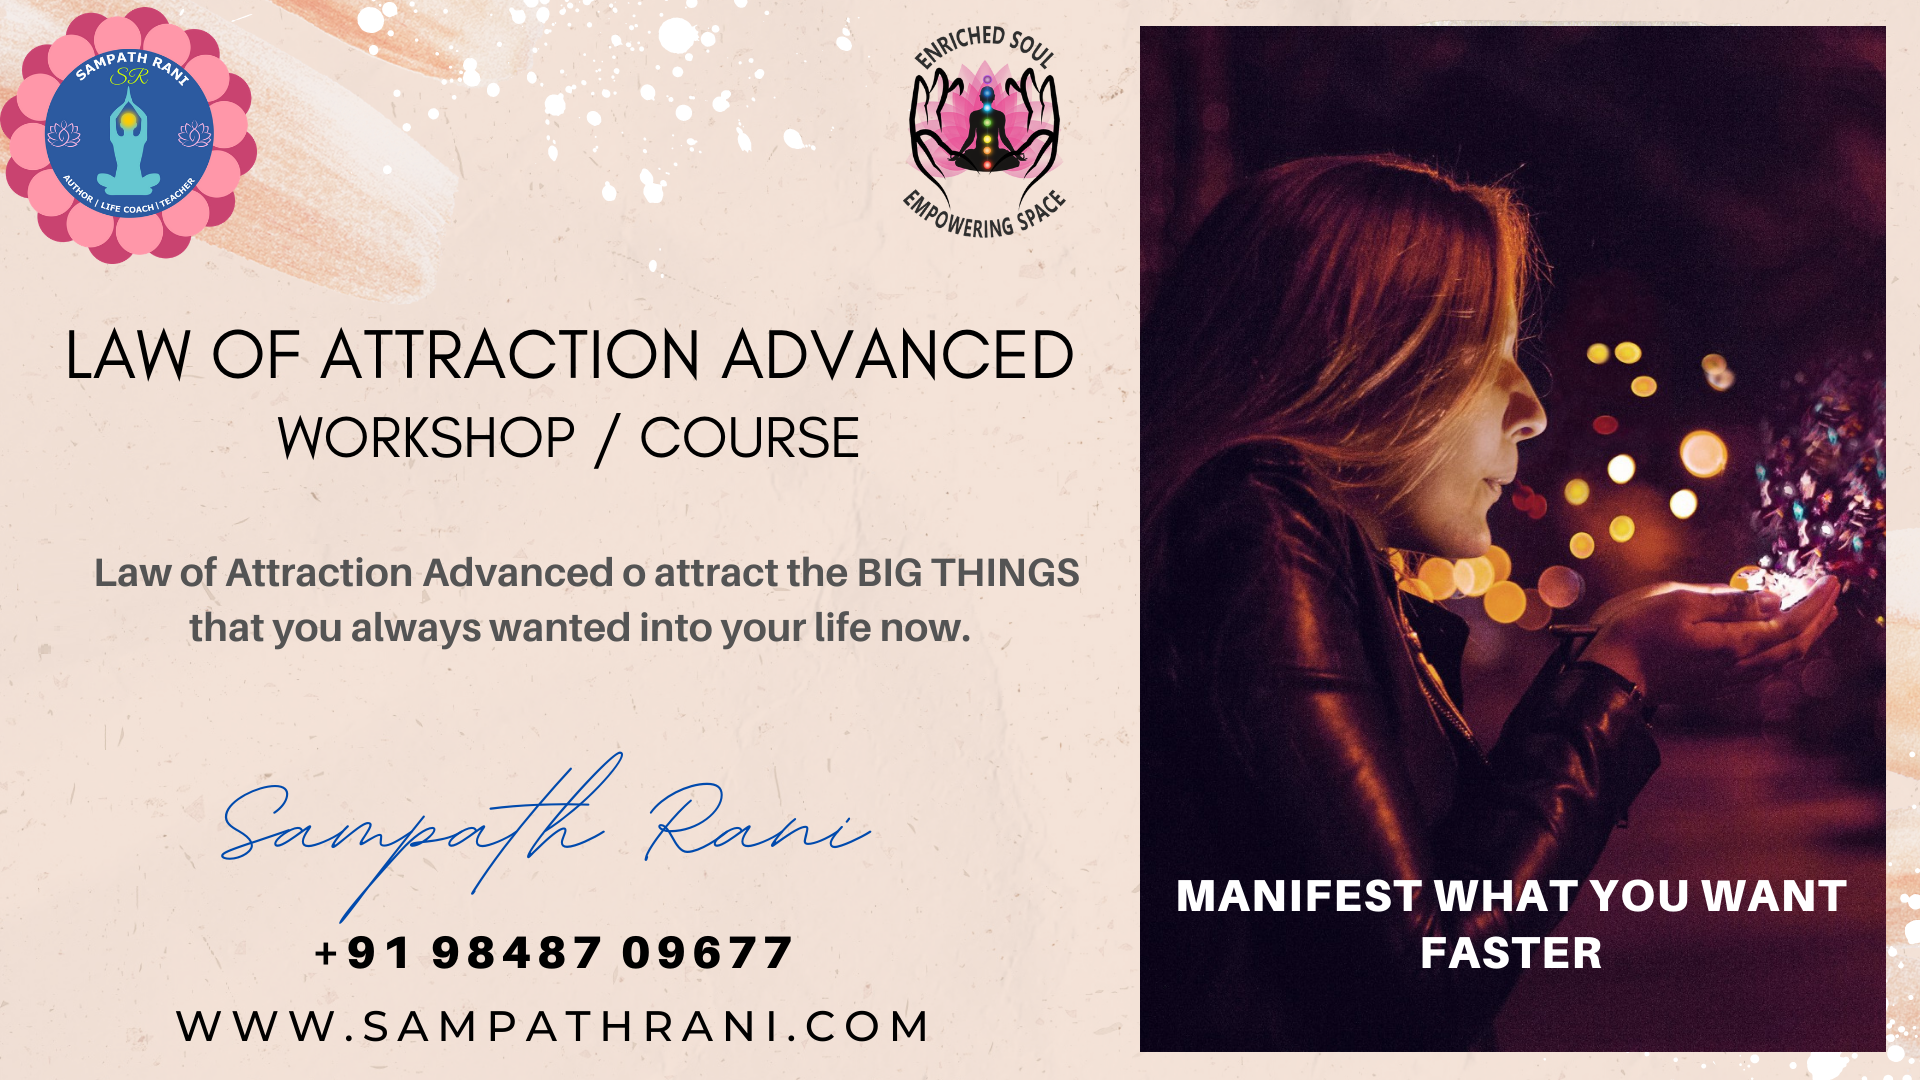 Law of Attraction Advanced Workshop, Course - by Sampath Rani - Vadodara